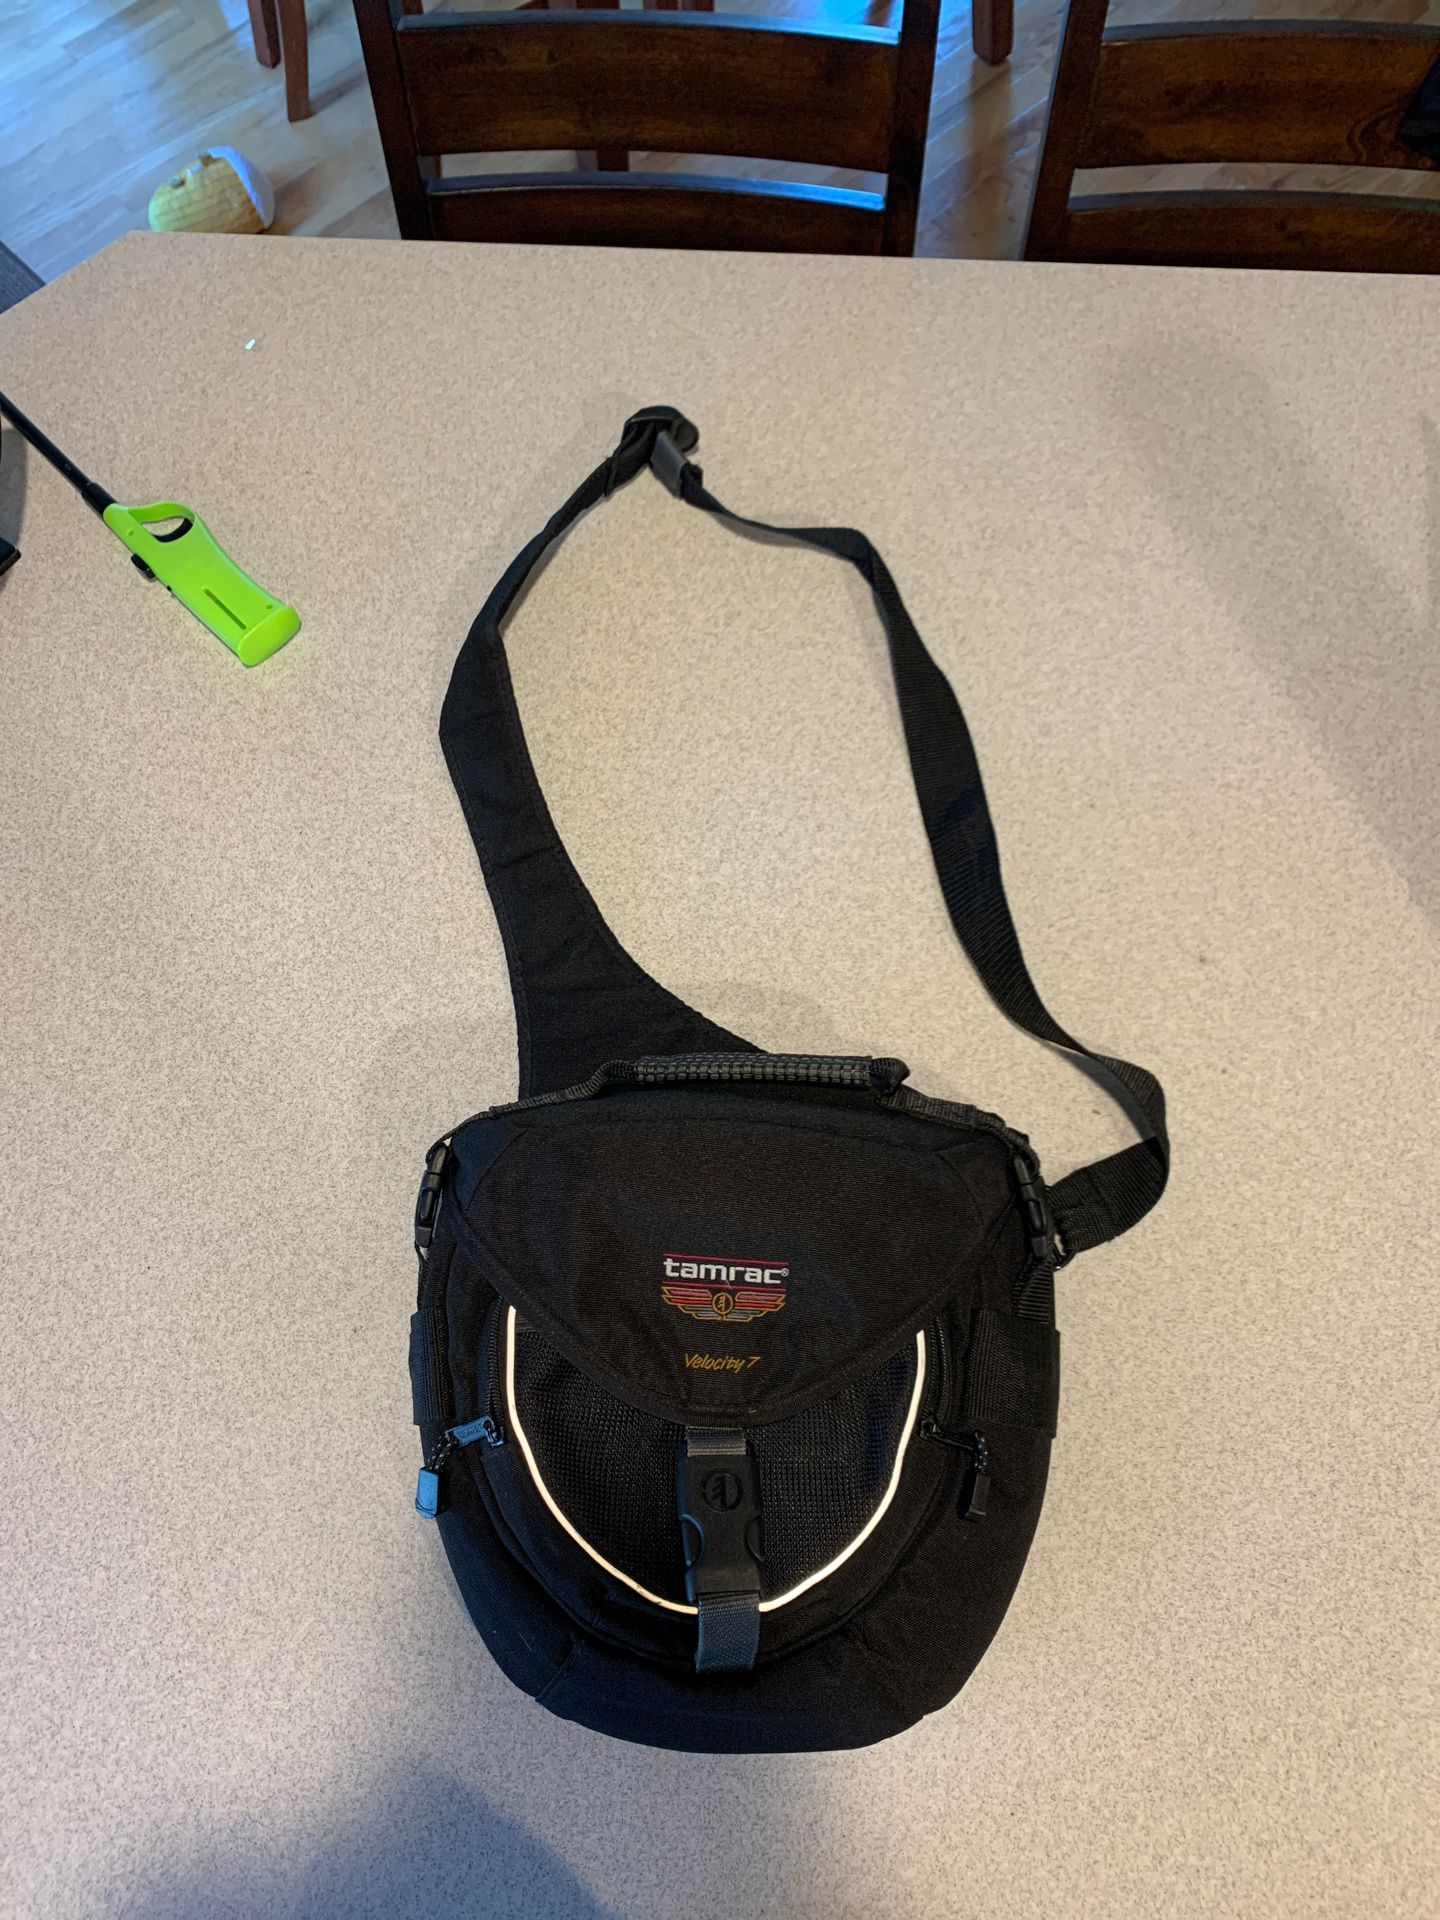 Tarmac DSLR camera Pouch. Velocity 7 shoulder bag.